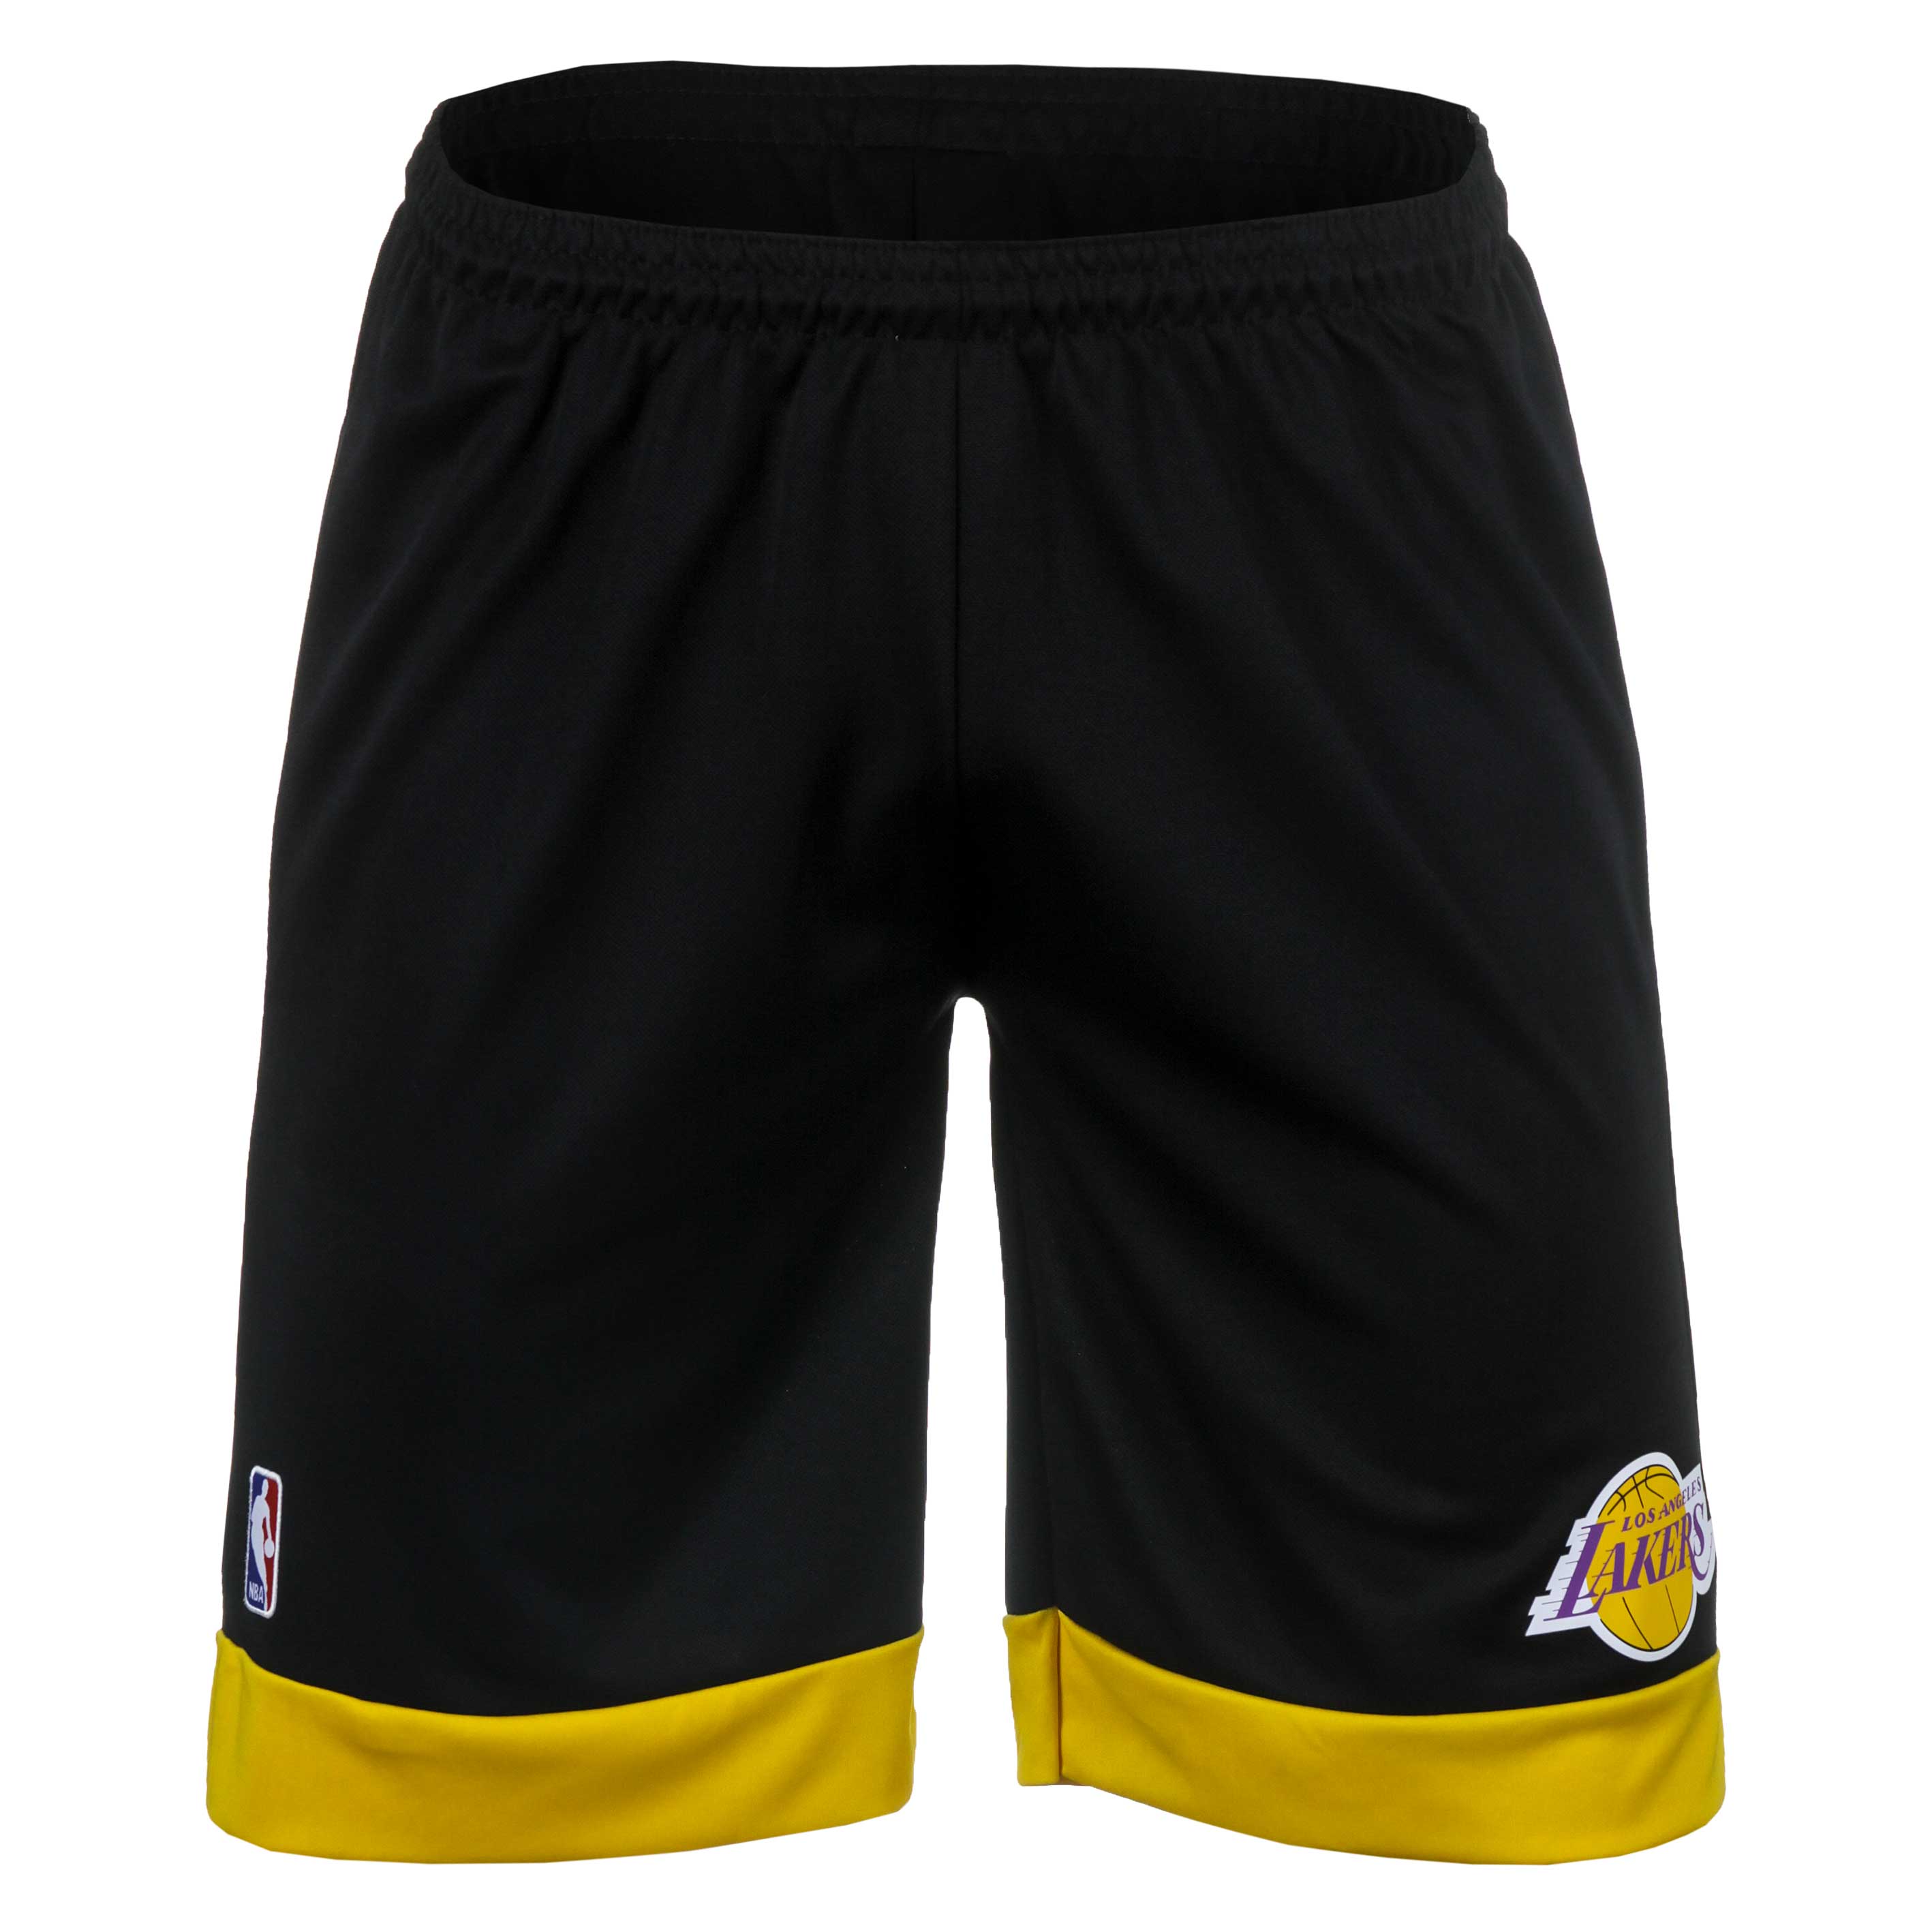 Bermuda Masc. Spr Nba Game Lakers - Preto/Amarelo